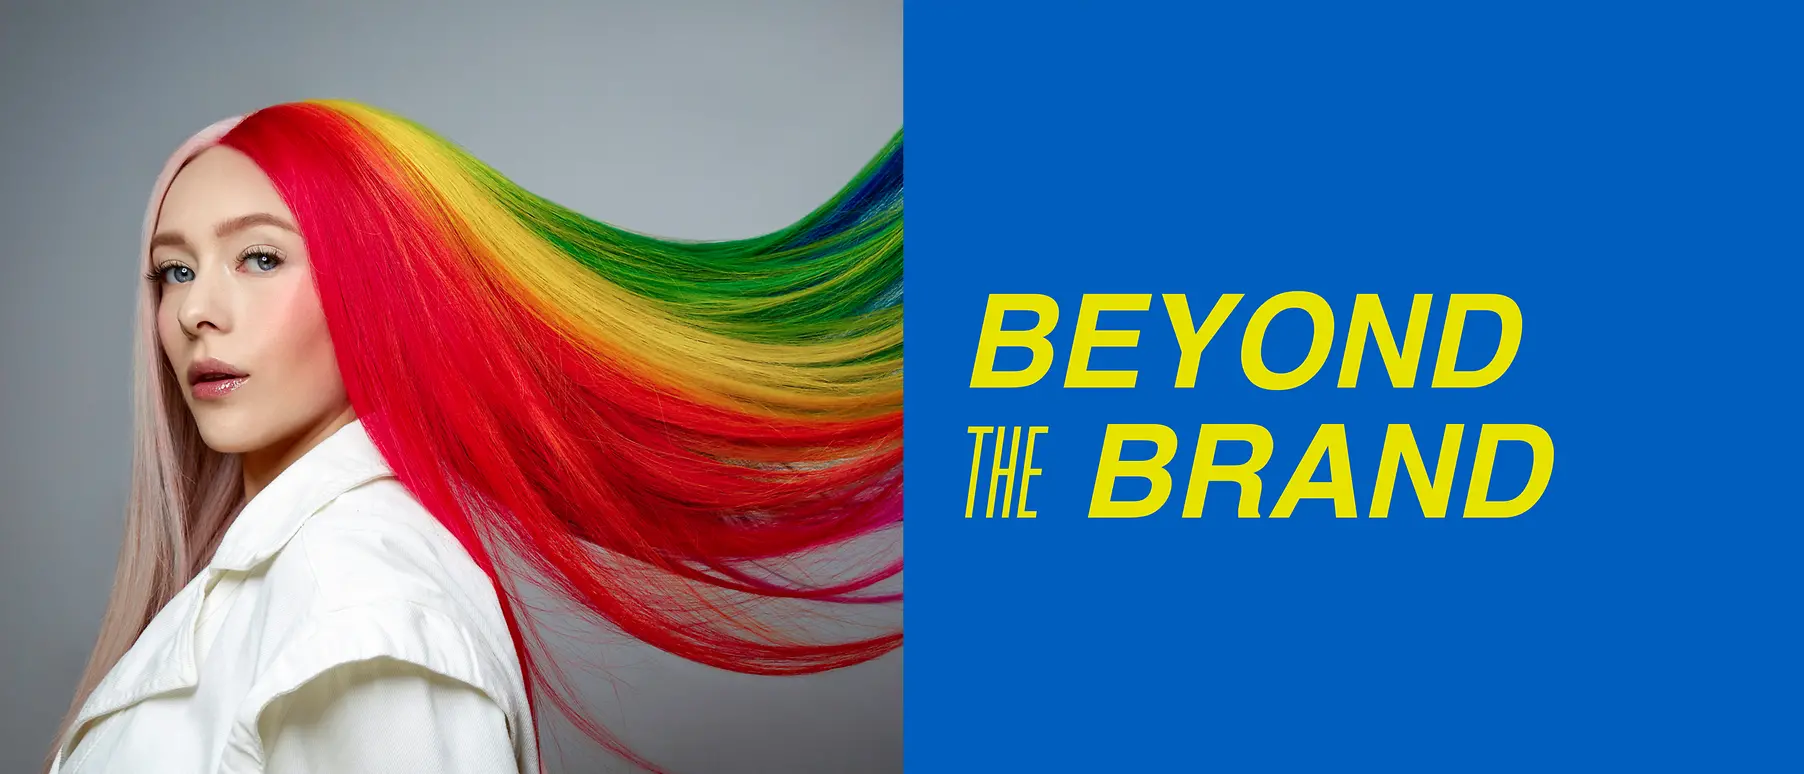 Beyond the Brand - Pravana®